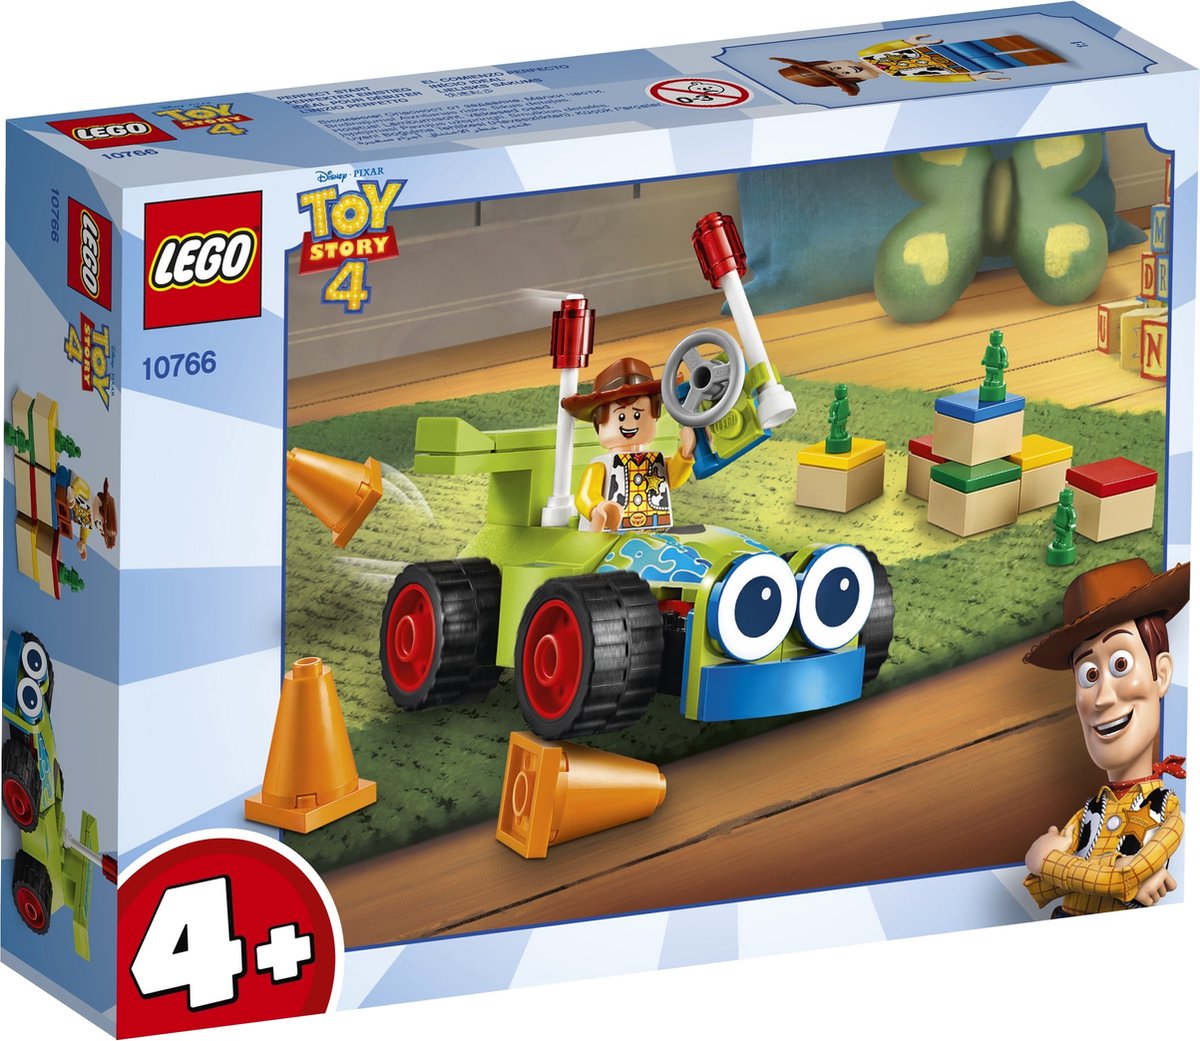 LEGO 4+ Toy Story 4 Woody & RC - 10766 - LEGO